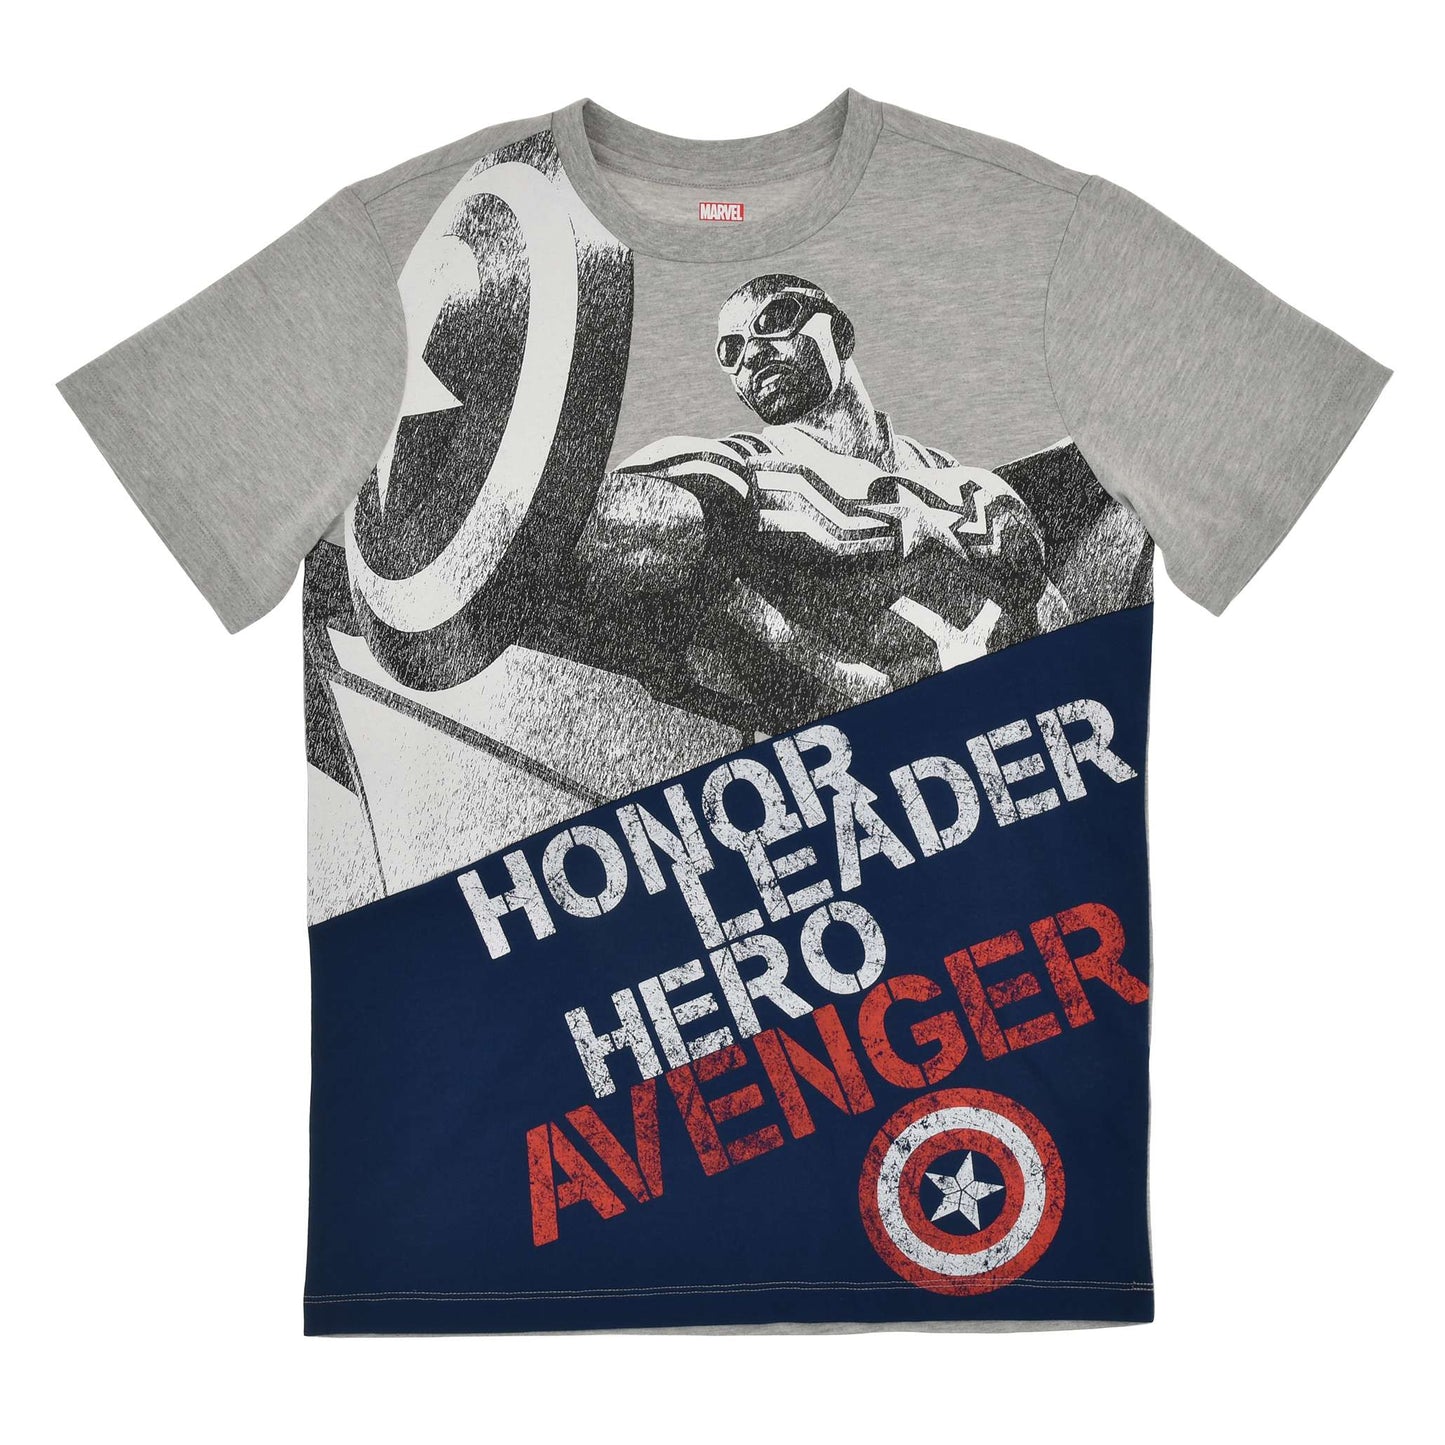 Disney Store - Marvel Captain America - Kurzarm T-Shirt